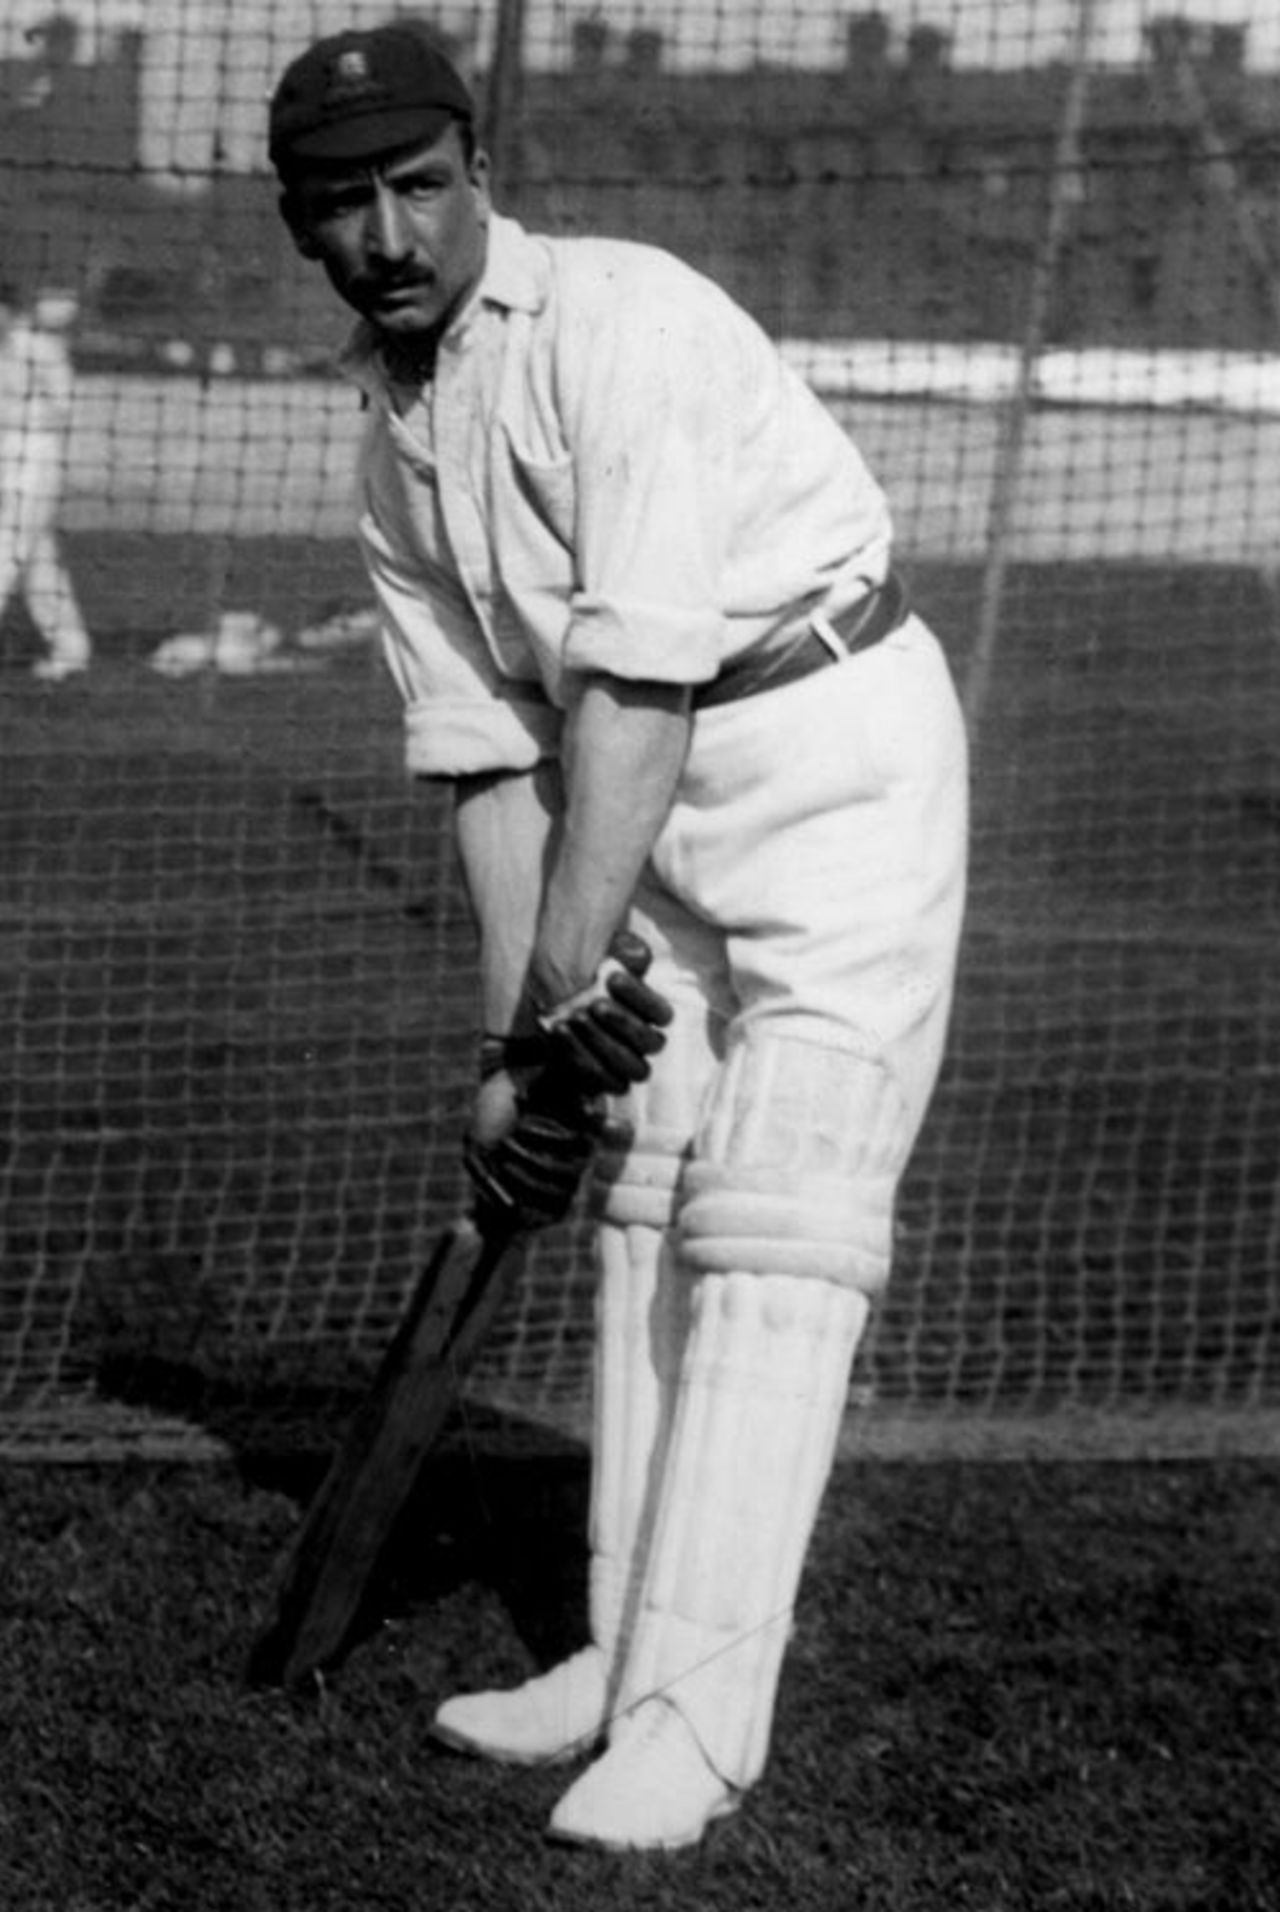 Essex batsman John Freeman in the nets, April 1, 1914